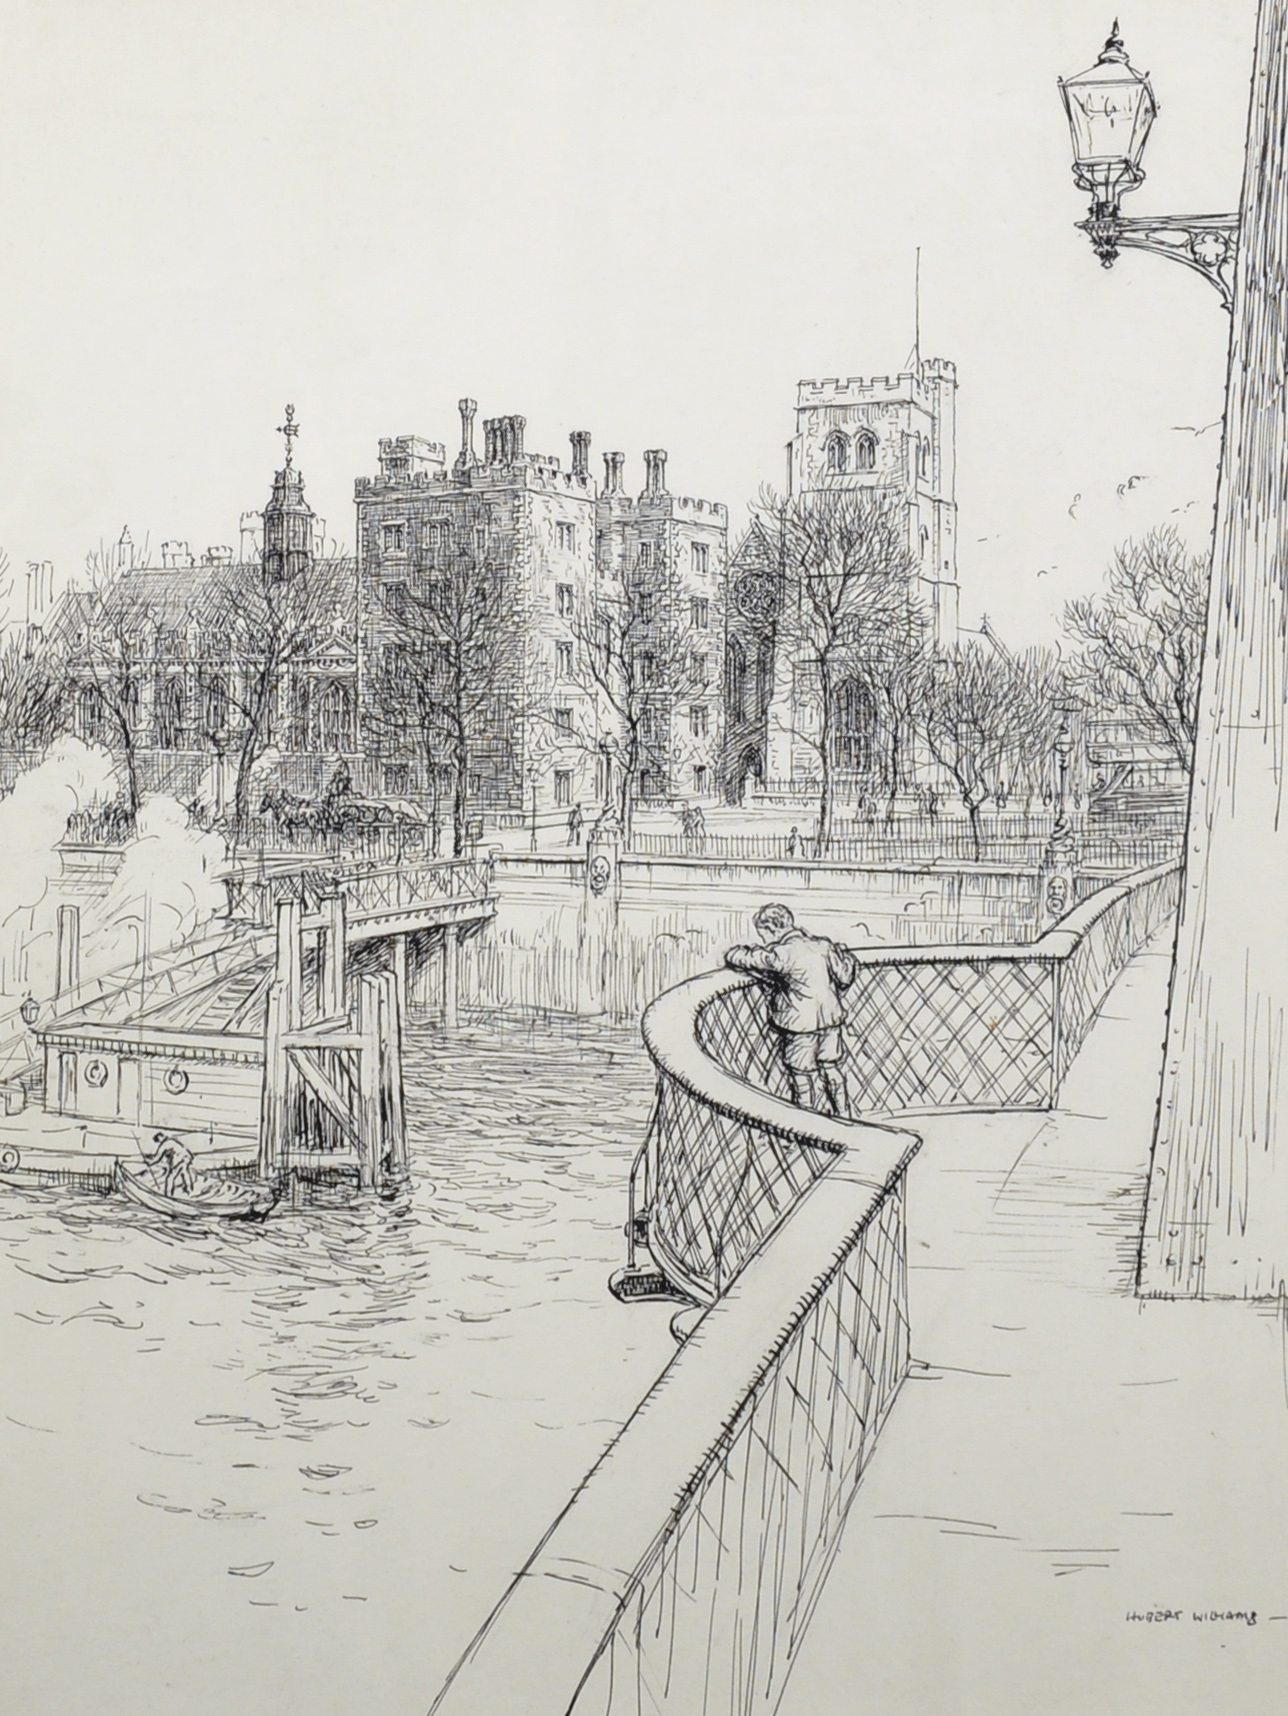 Herbert Williams (20th - 21st Century) British. "Lambeth Palace and Church, From Lambeth Bridge",